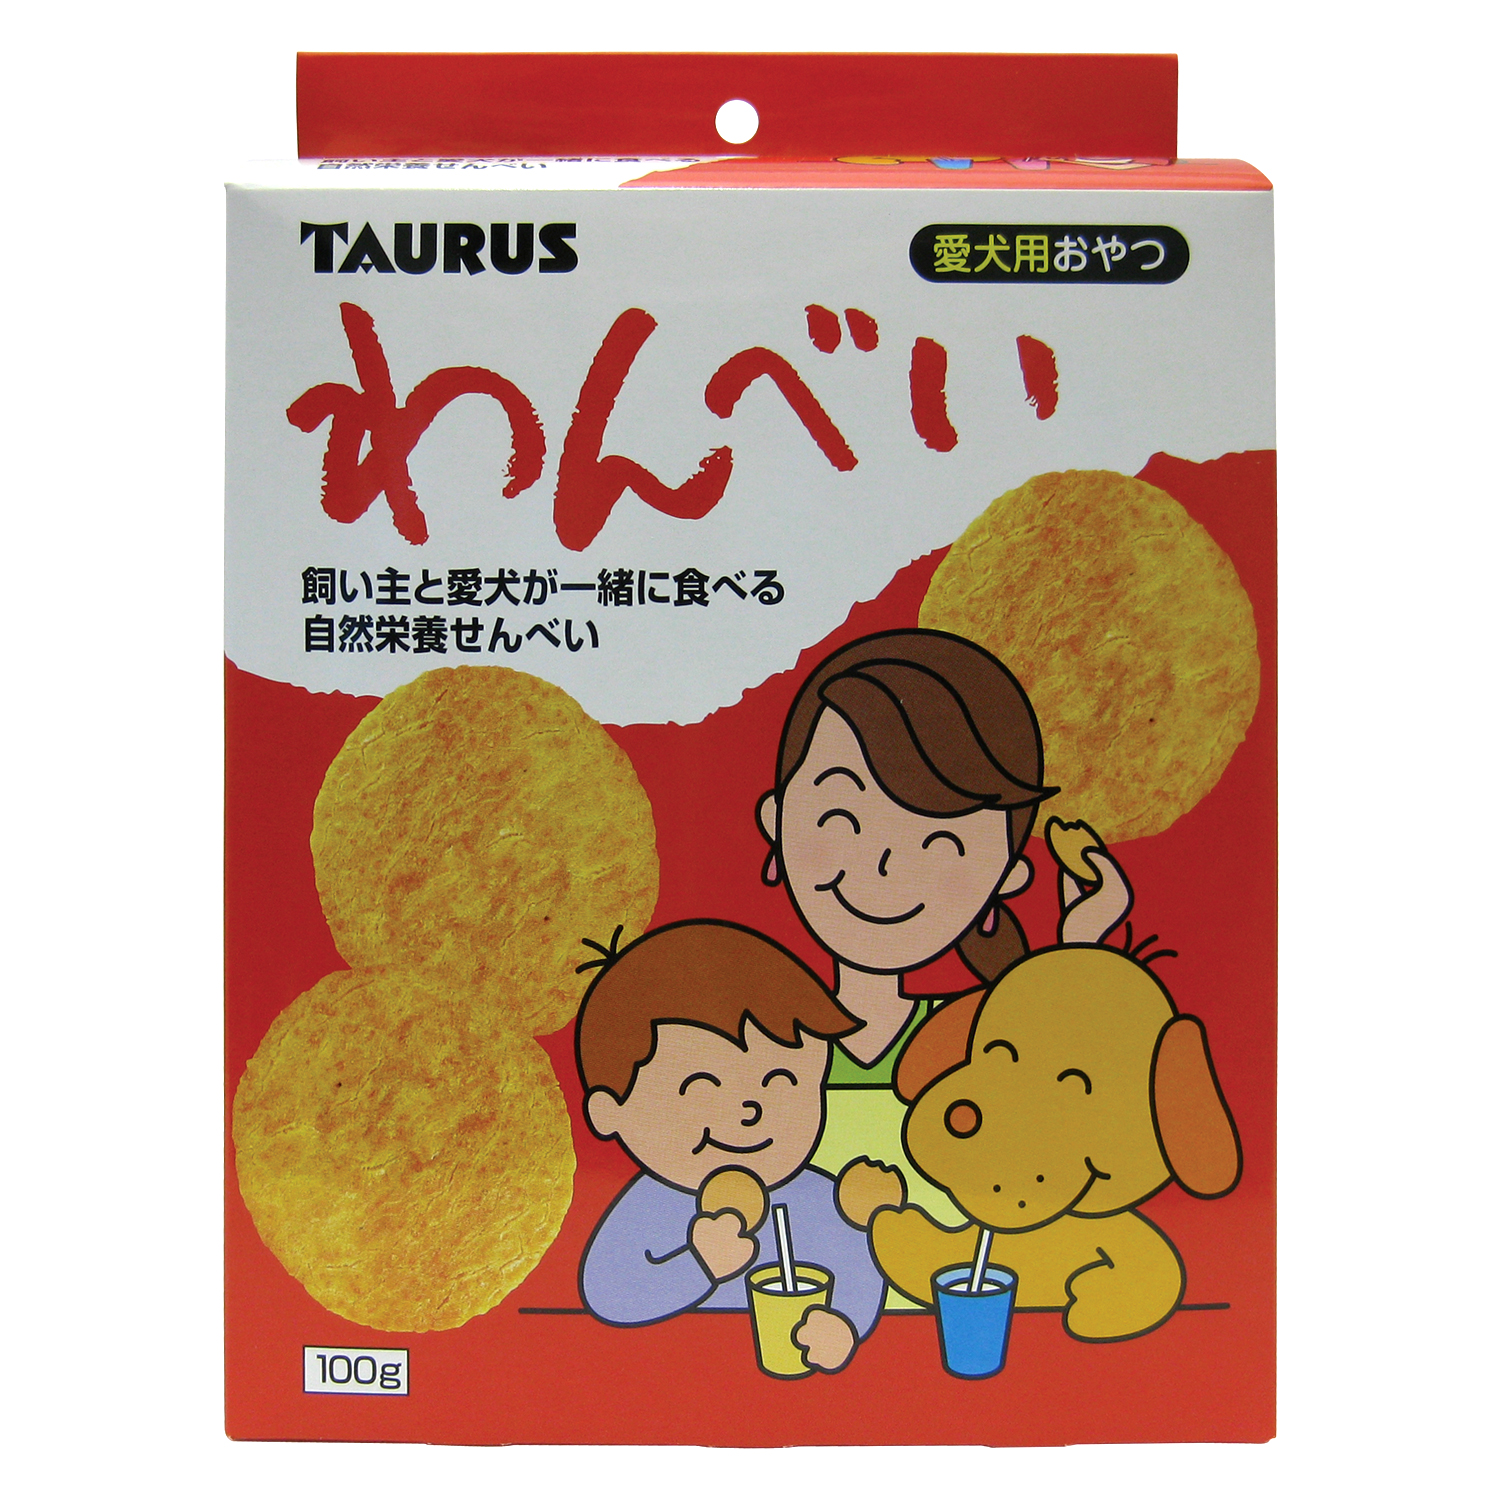 TAURUS-汪貝狗餅乾
TAURUS-wang-bei dog tret